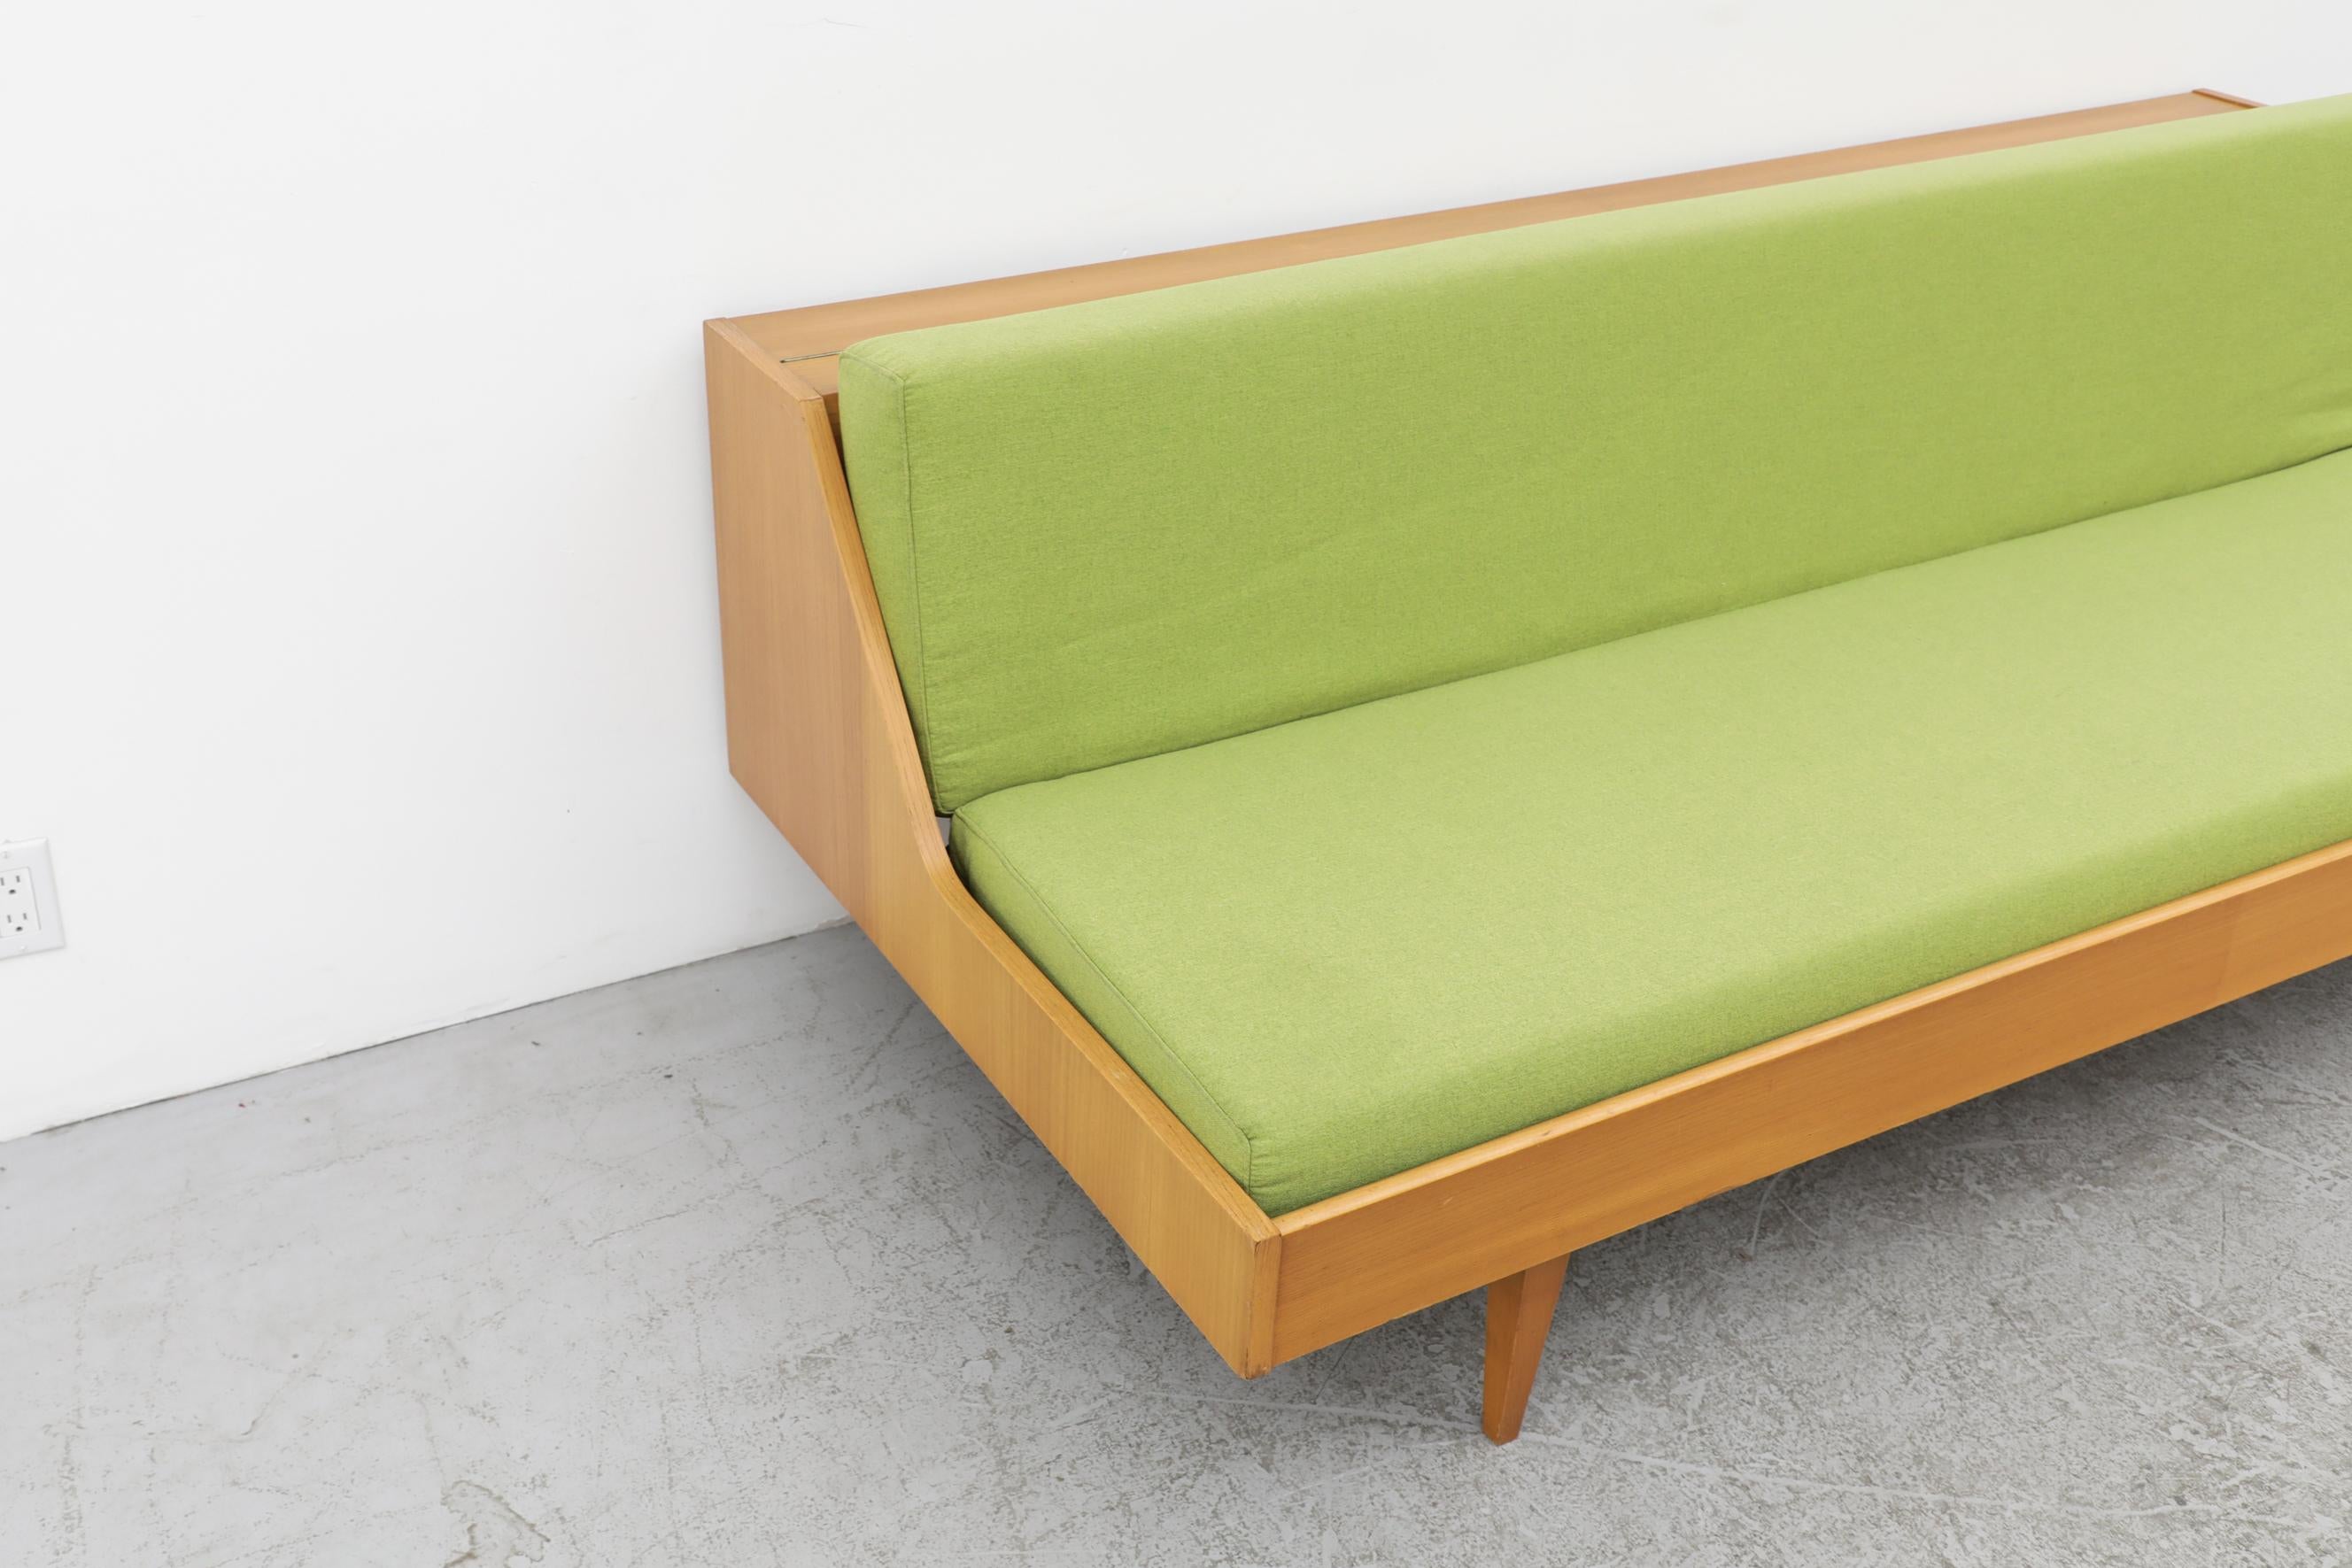 Dutch Hans Wegner 'attr' Model GE 258 for Getama Sleeper Sofa With Green Upholstery